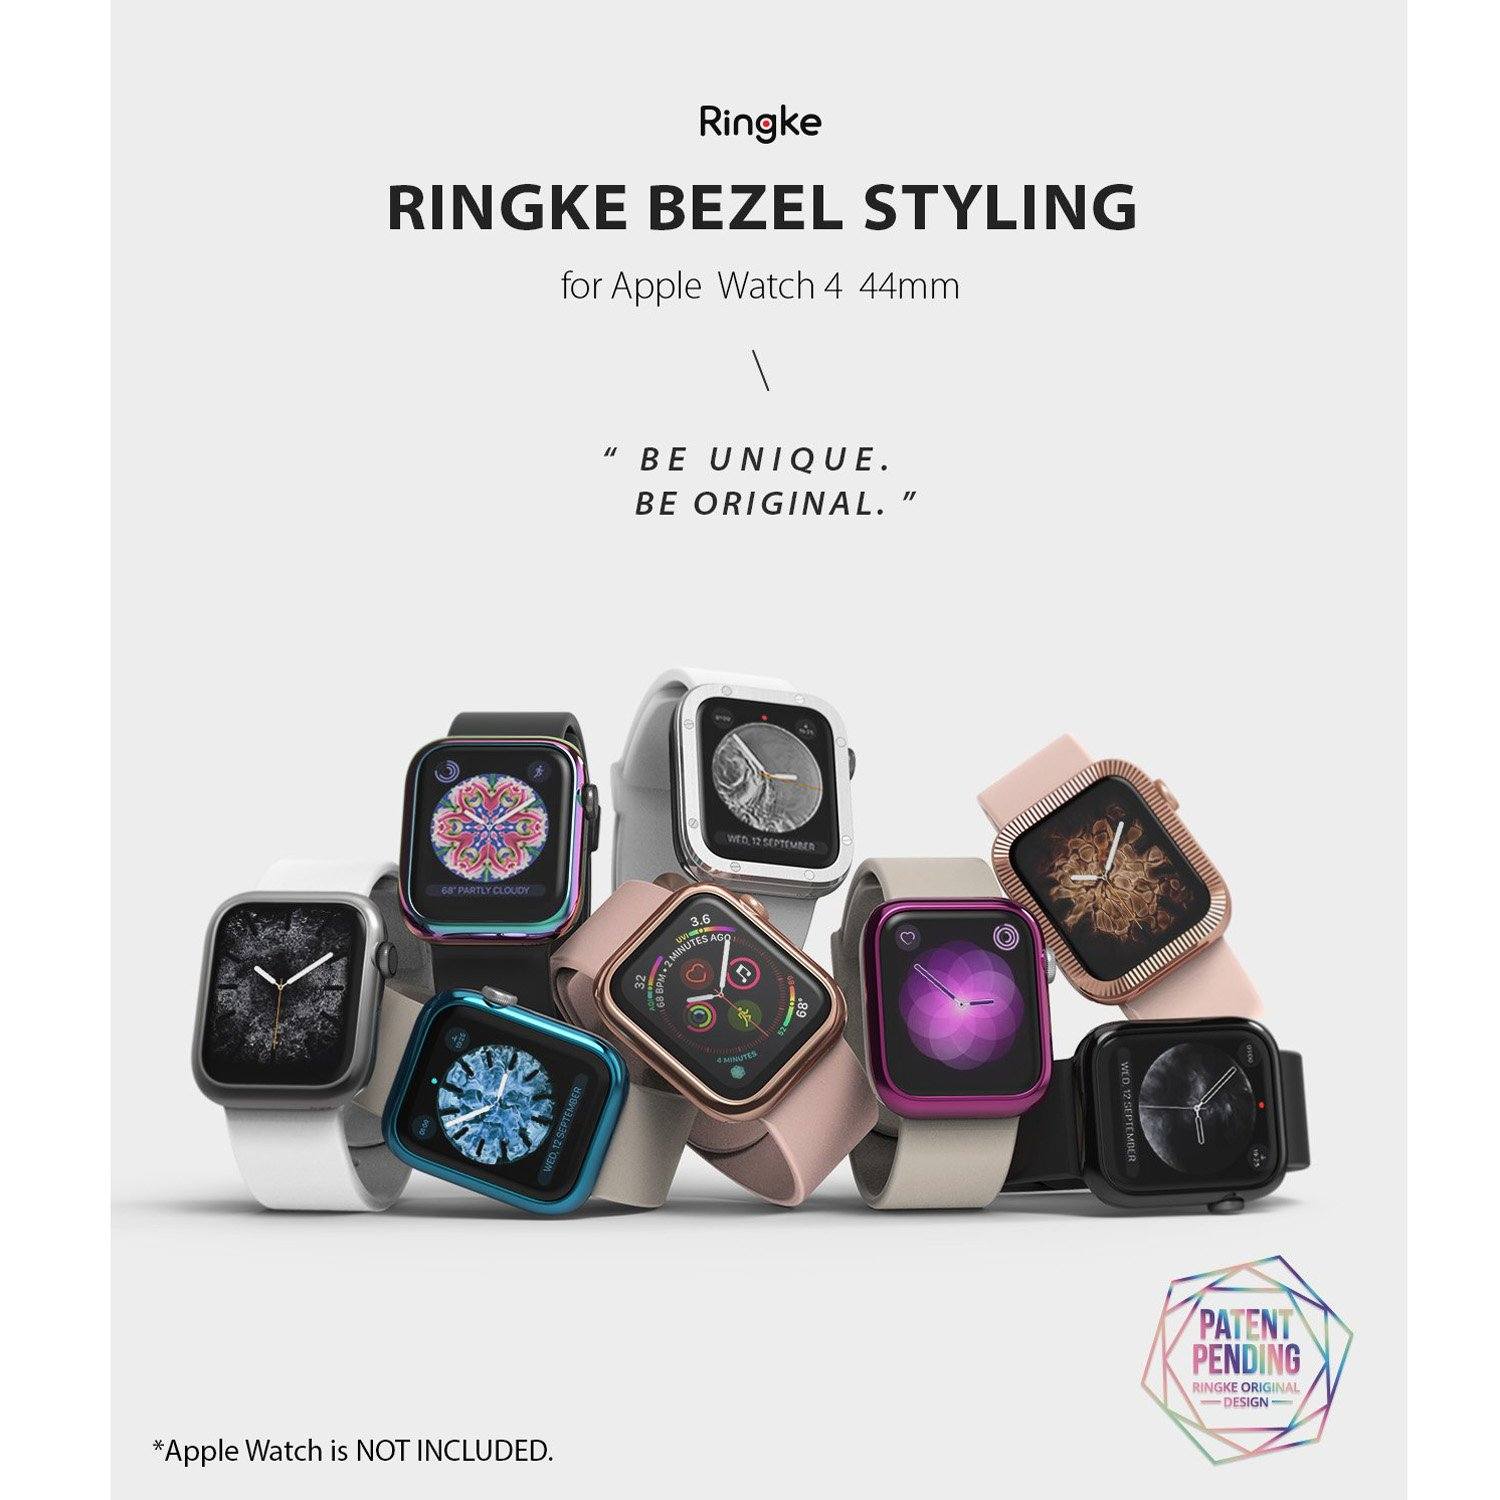 Ringke StainlessSteel BEZEL STYLING for Apple Watch Series 4/5/6/SE 44mm, Neon Chreome(AW4-44-08) Default Ringke 